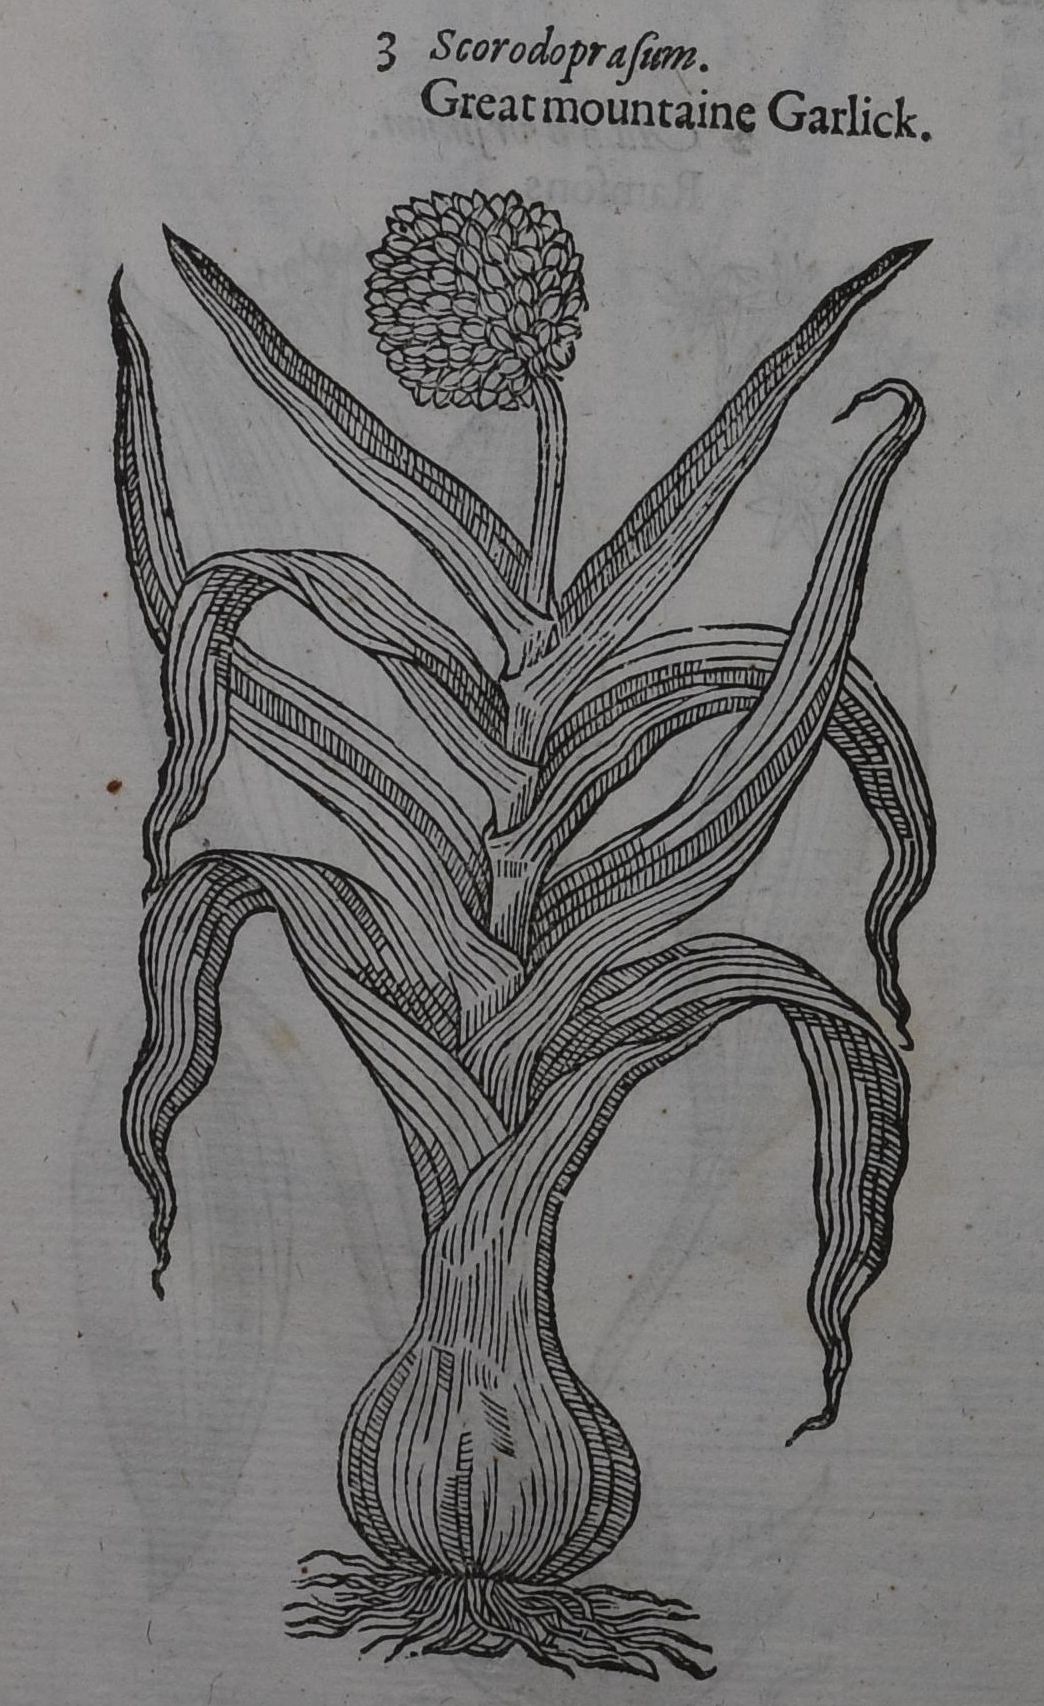 Gerard’s Herbal or Generall Historie of Plants by John Gerard, c 1597.